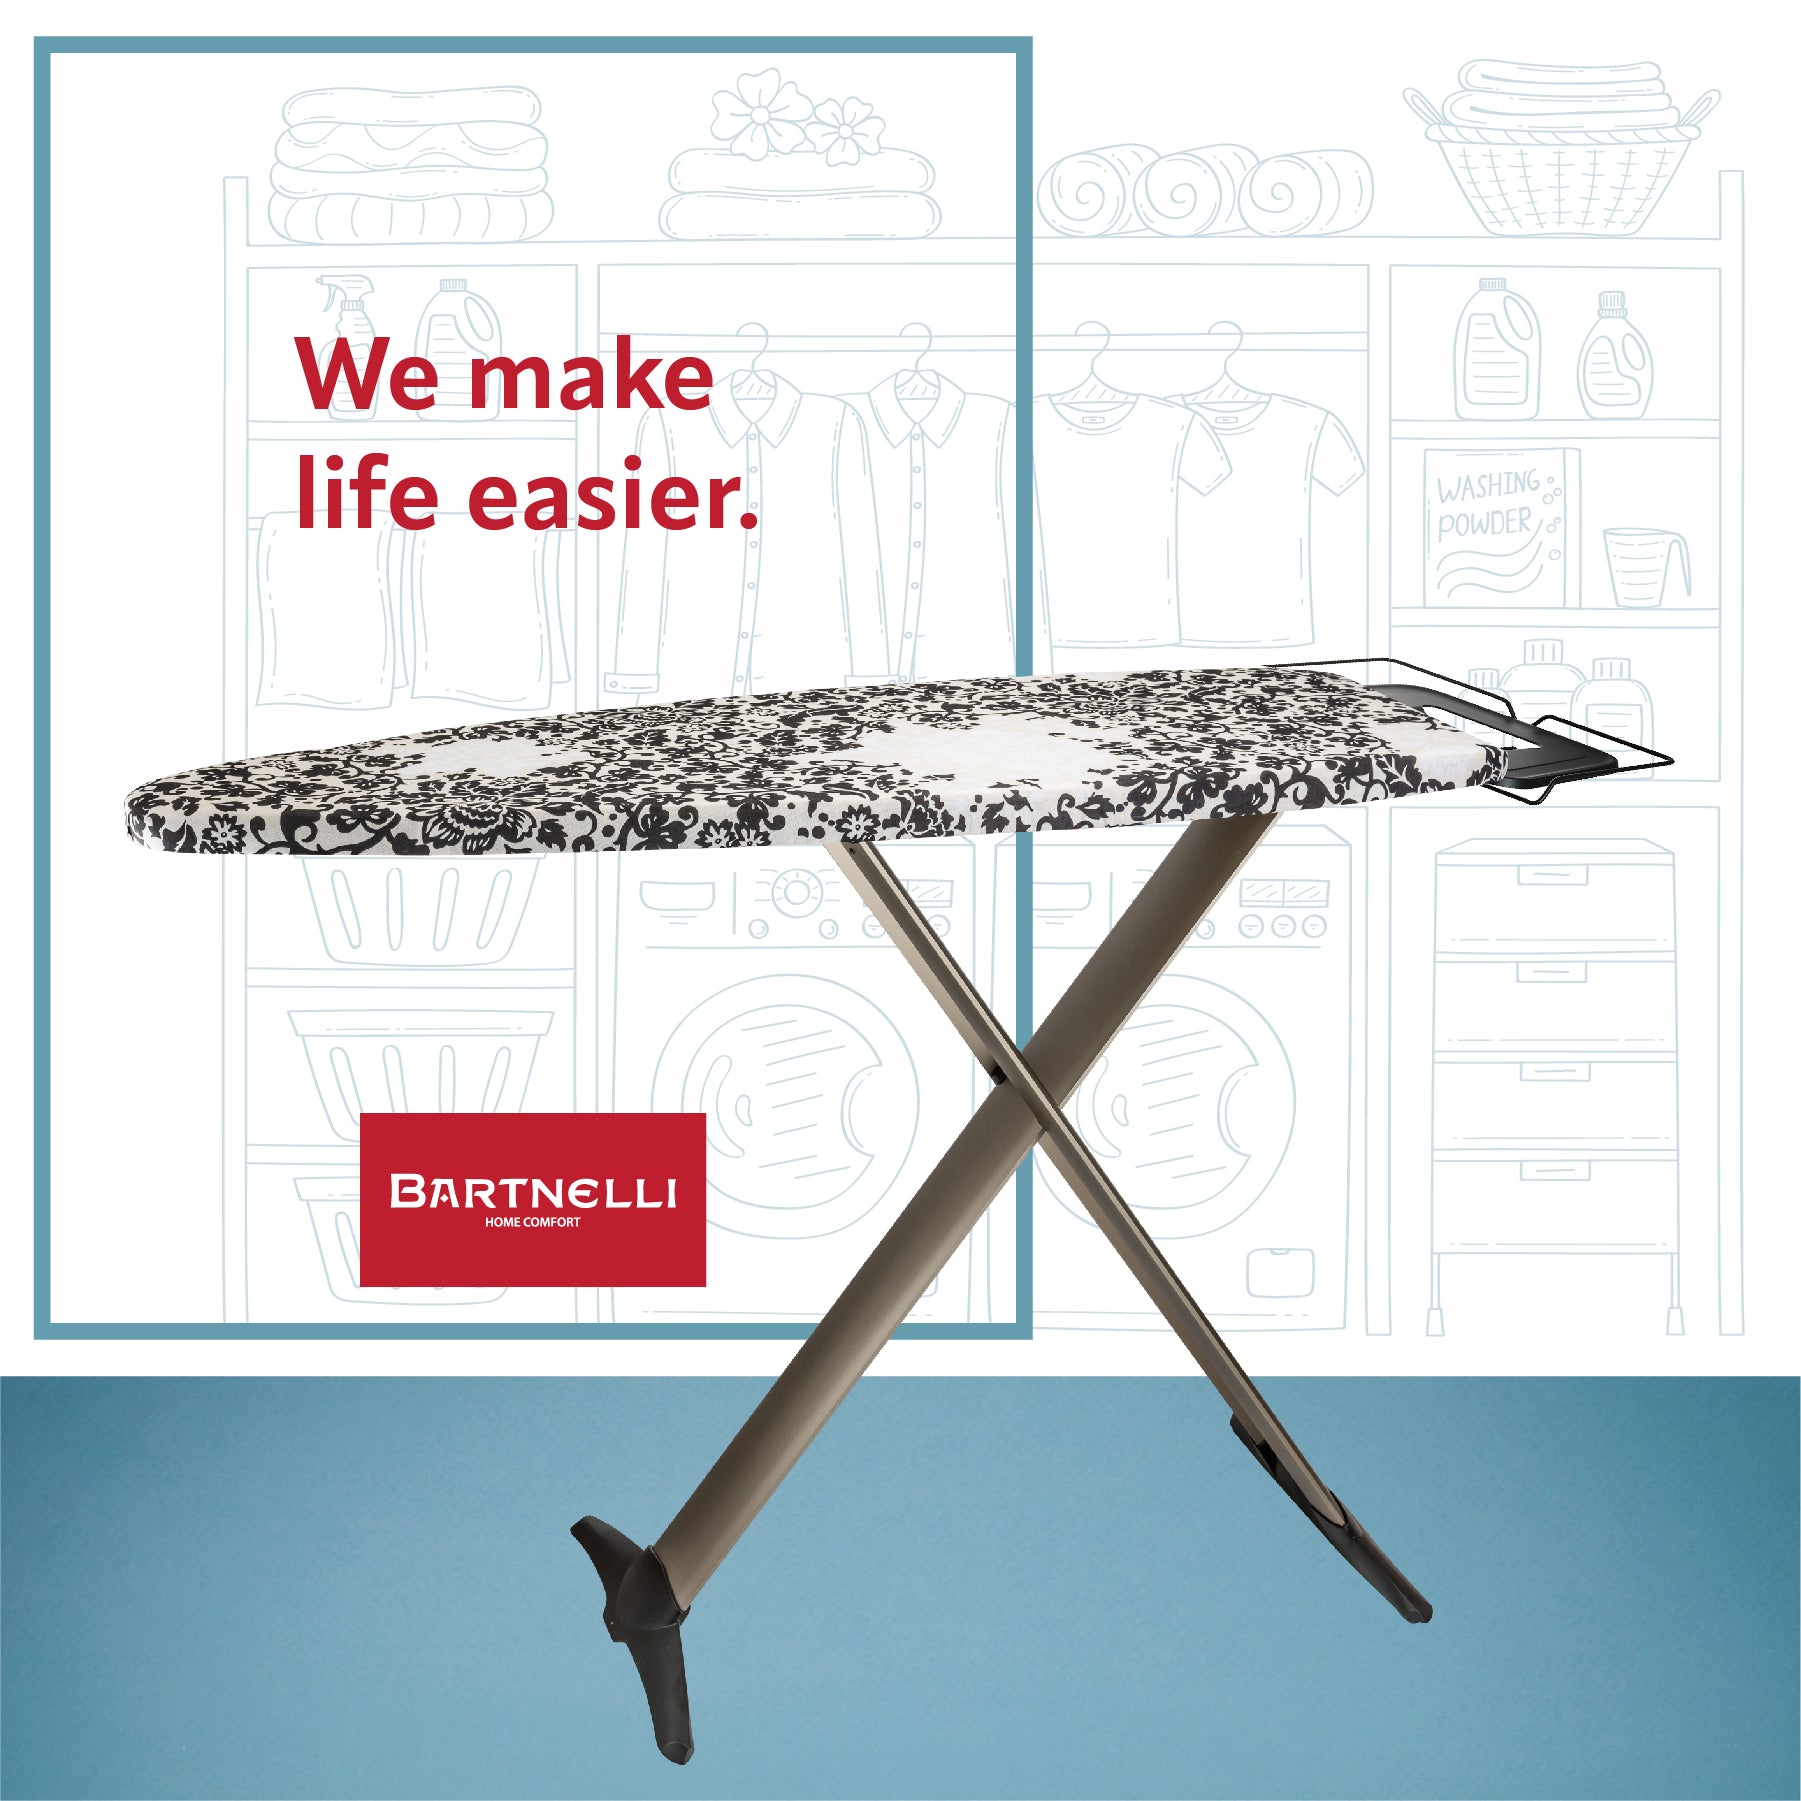 Bartnelli Pro Luxury Ironing Board - Extra Wide 51x19” Steam Iron Rest, Adjustable Height, T-Leg Foldable, European Made